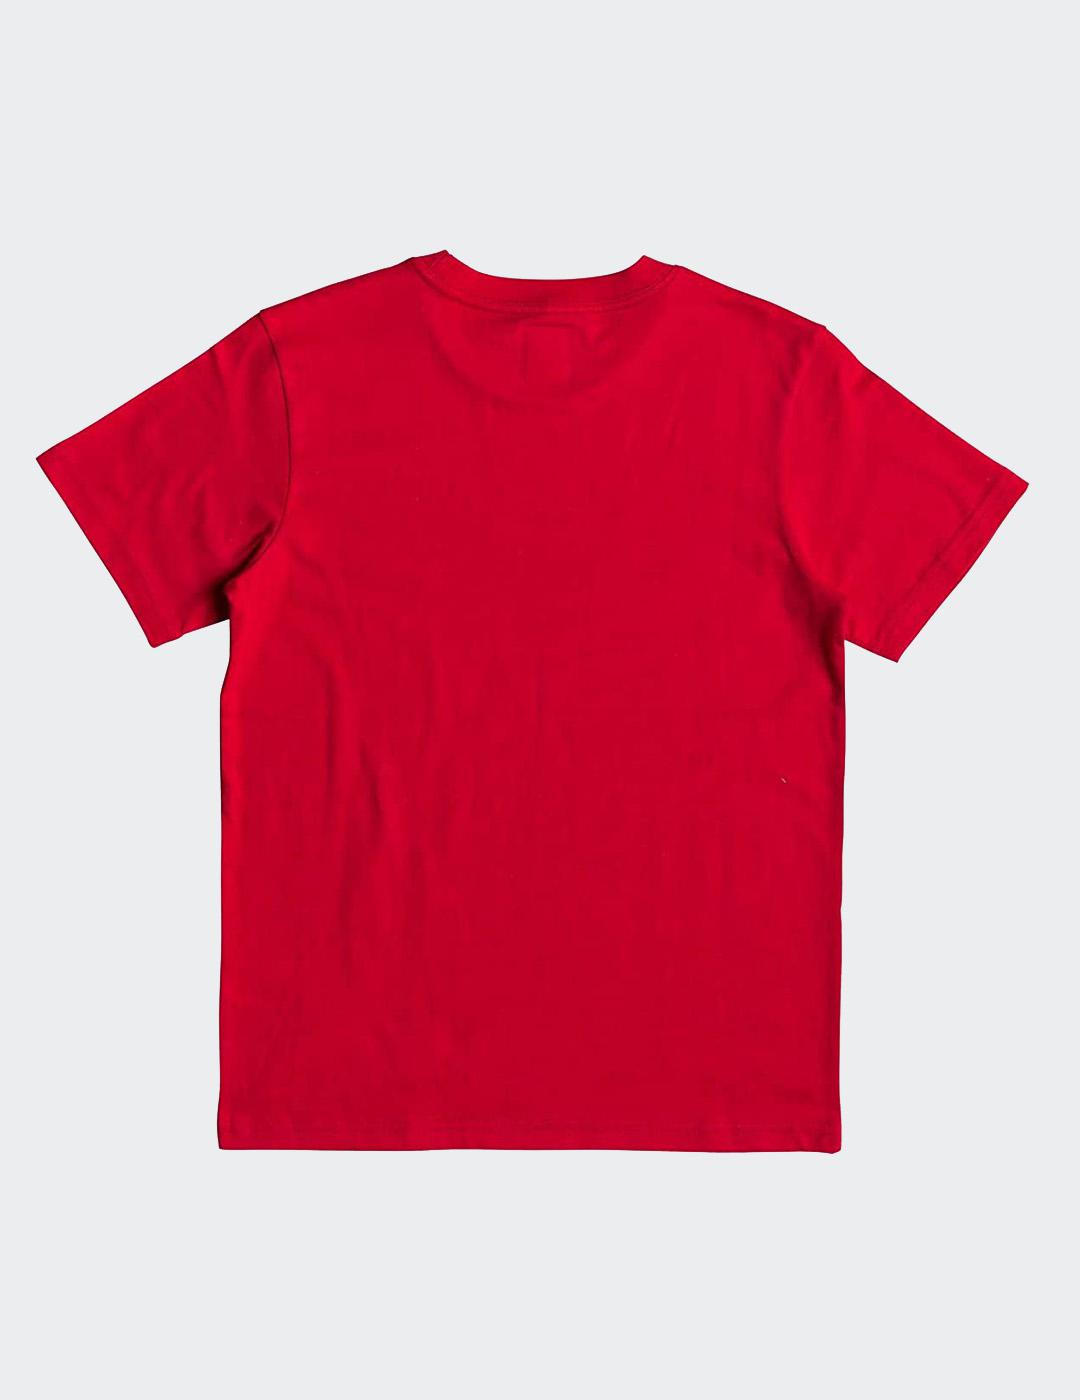 Camiseta JR AHERO - RED